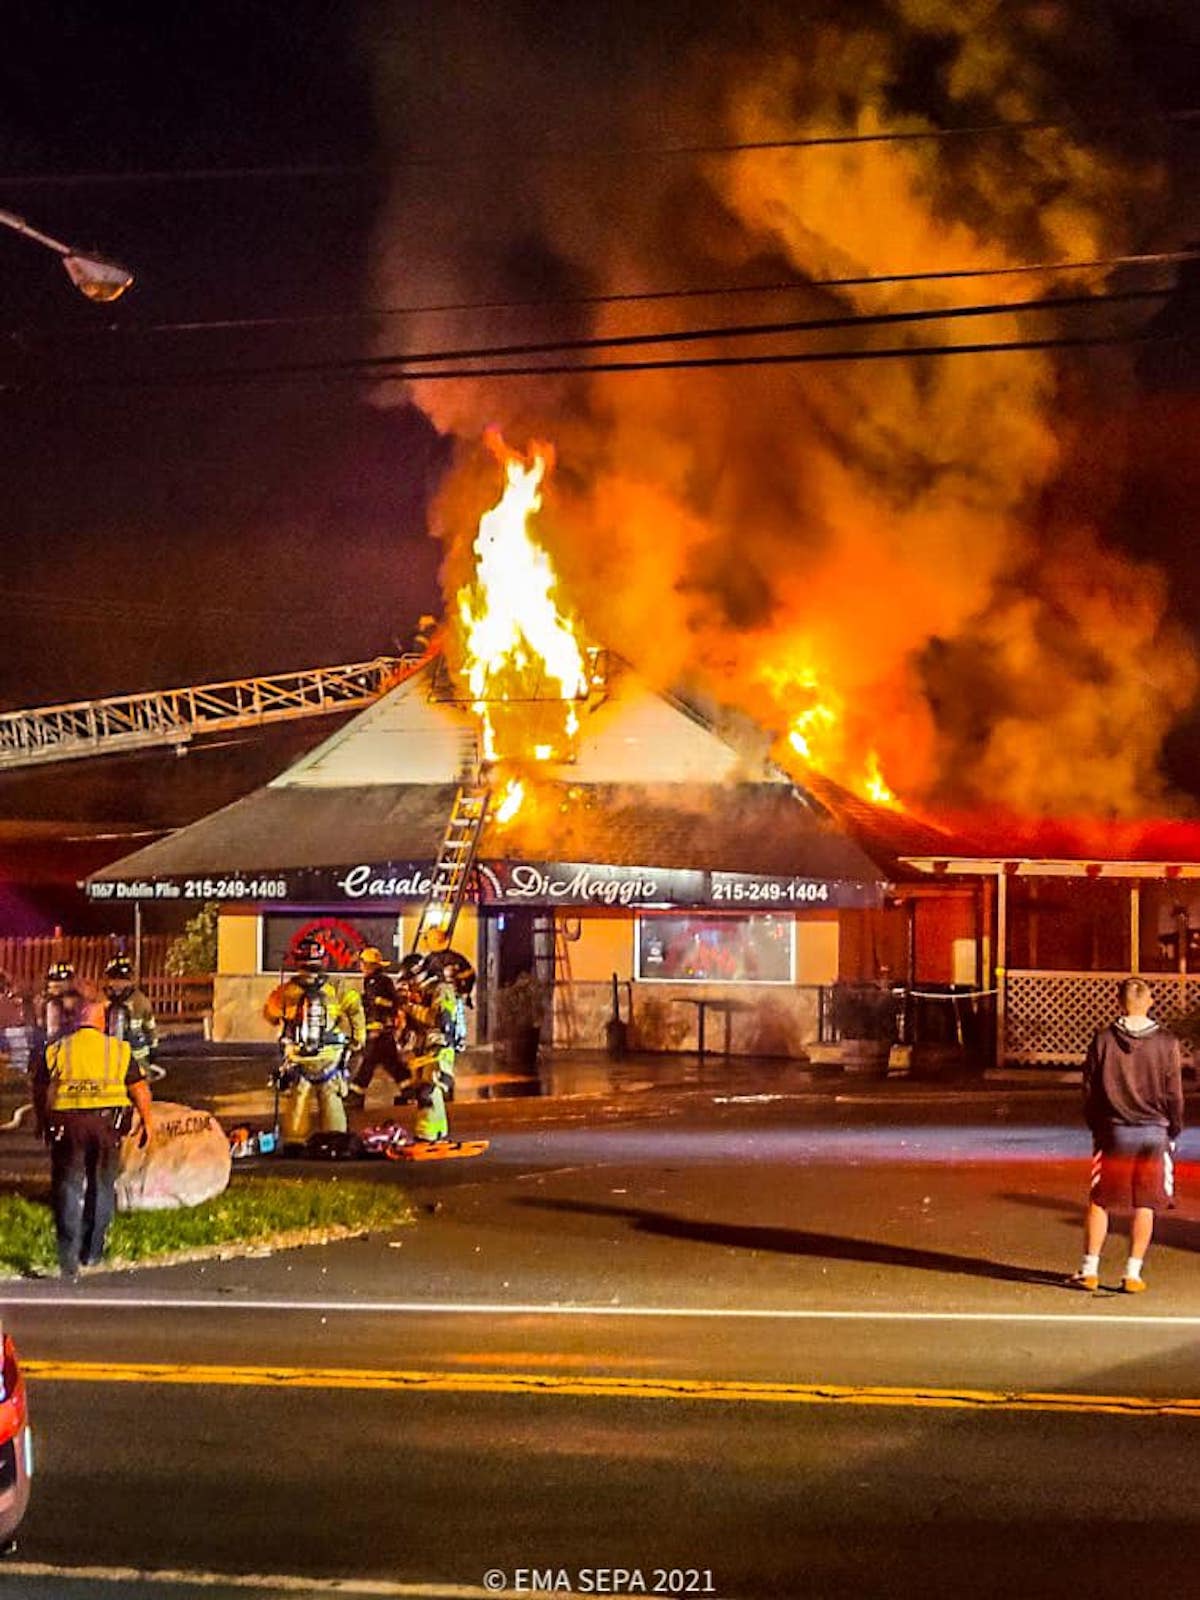 Bucks County Restaurant Will Rebuild After Devestating Fire